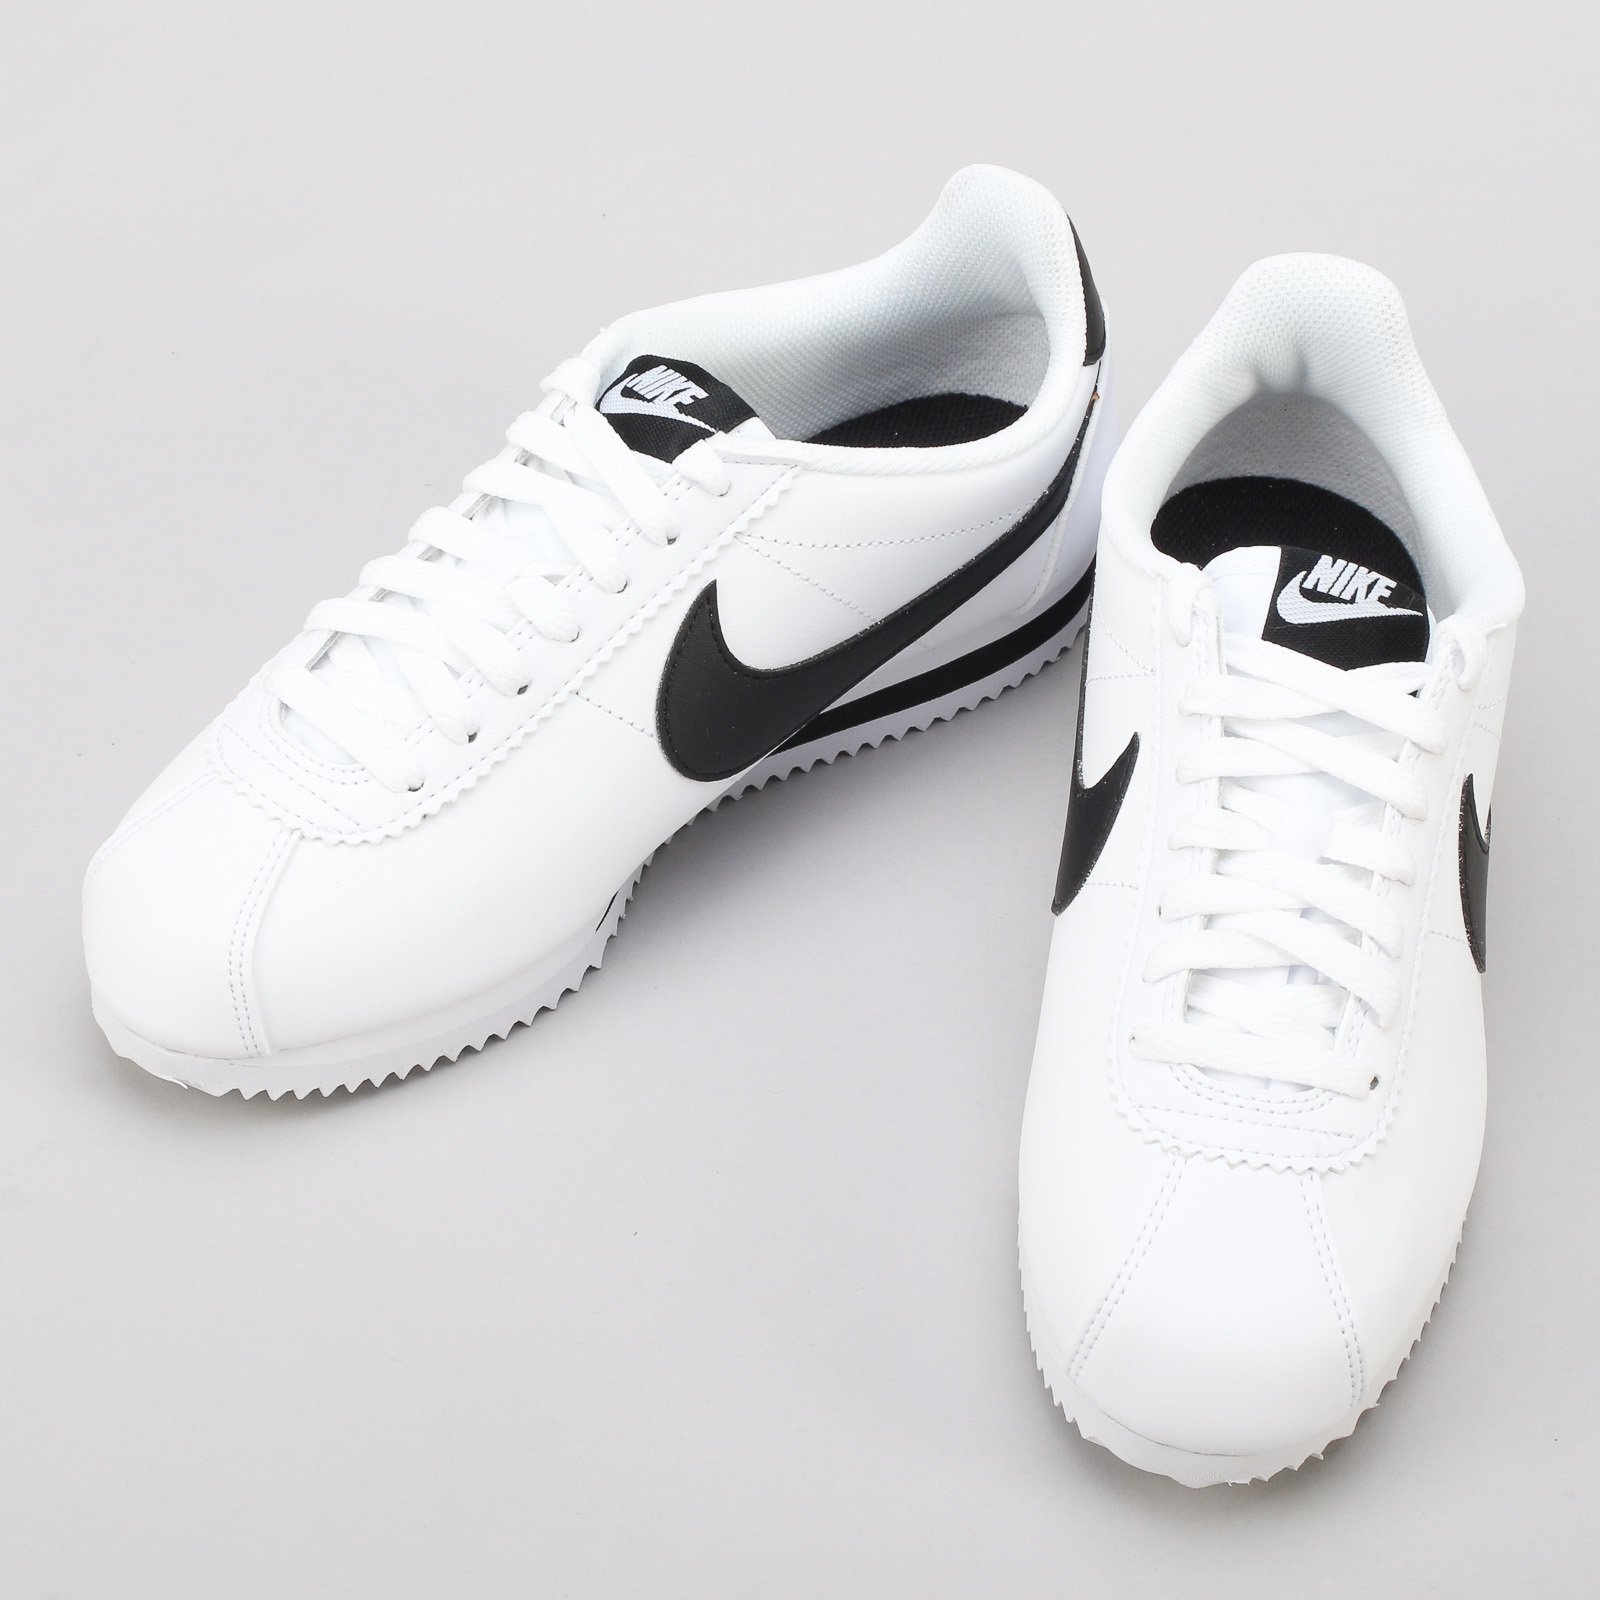 Nike Classic Cortez Black White (Women's)